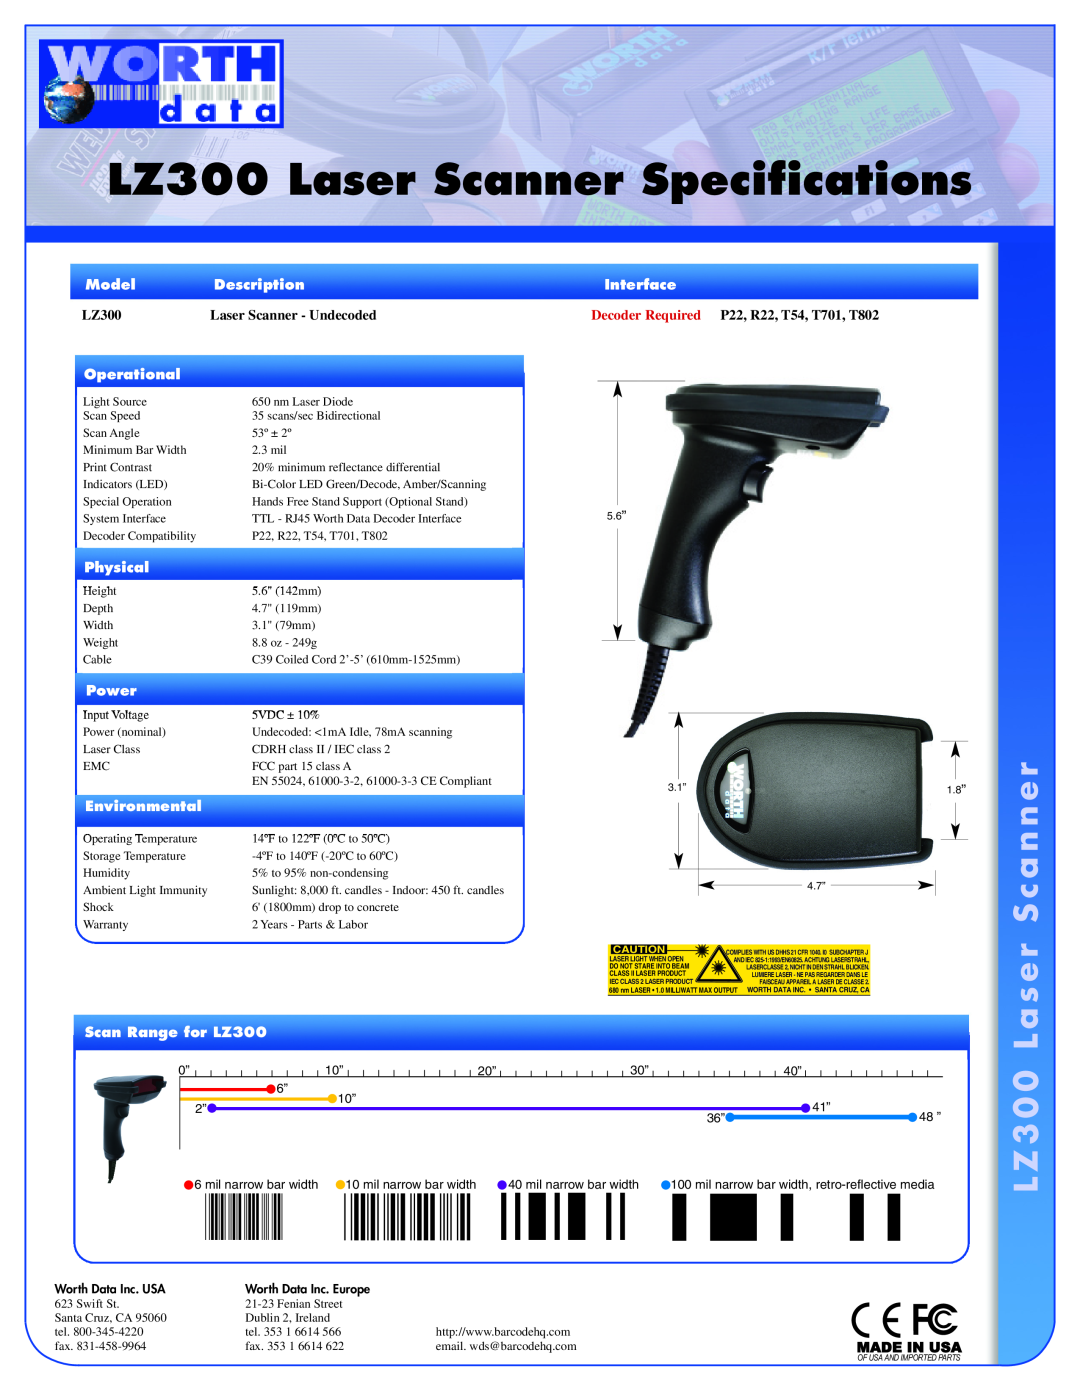 Worth Data specifications LZ300 Laser Scanner Specifications, a s e r S c a n n e r, L Z 3 0 0 L, Model, Description 